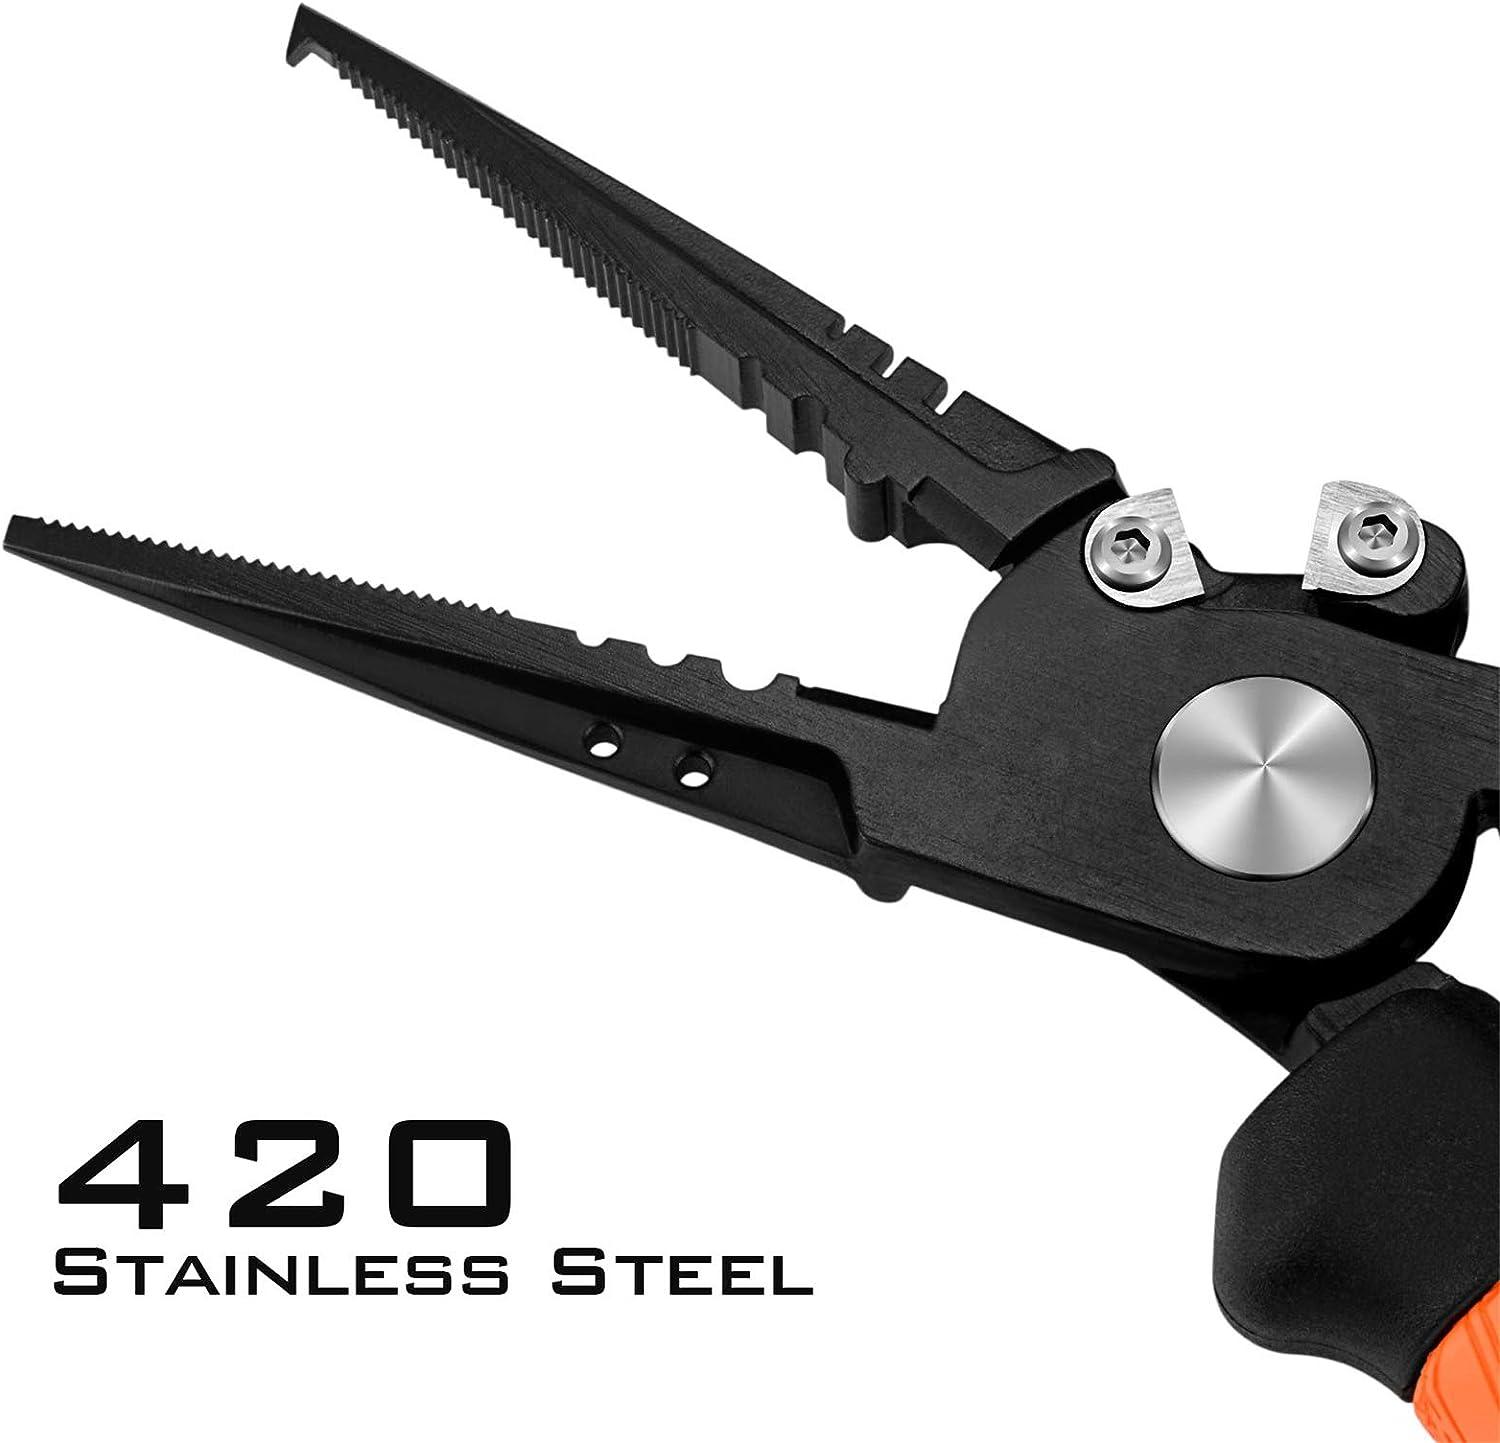 KastKing Speed Demon Pro Fishing Pliers, 420 Stainless Steel